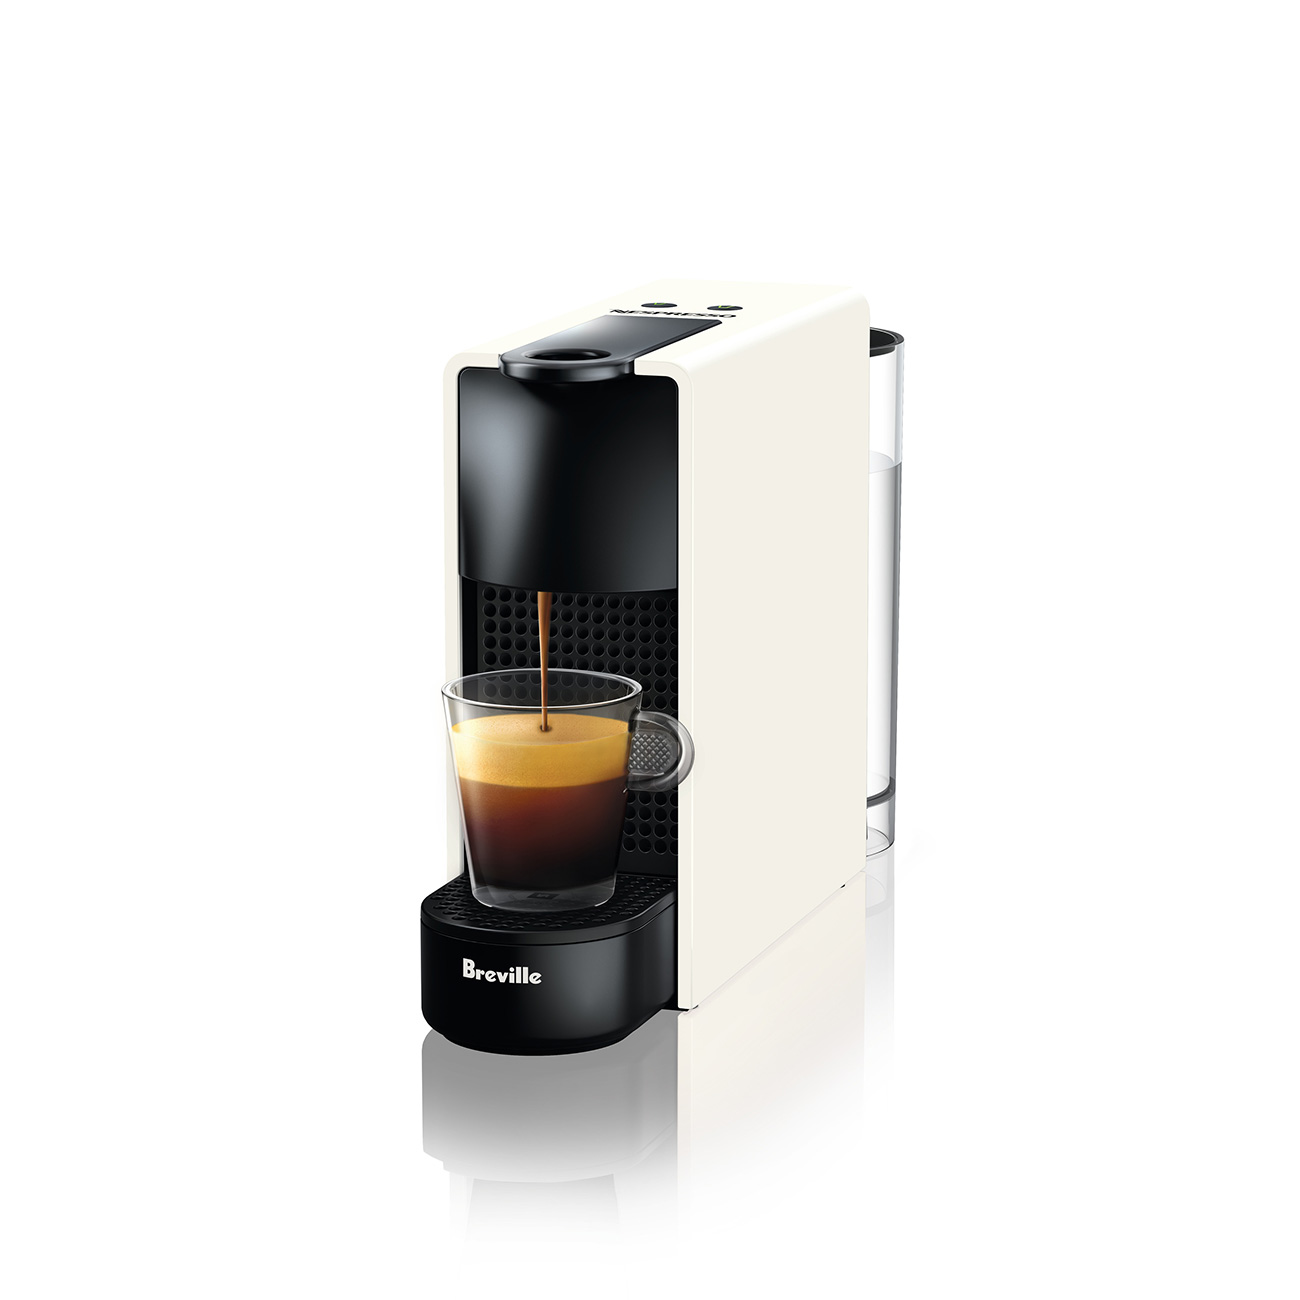 Mini NEW Nespresso BEC220GRY1AUC1 Essenza by Breville Coffee Machine in Silver 